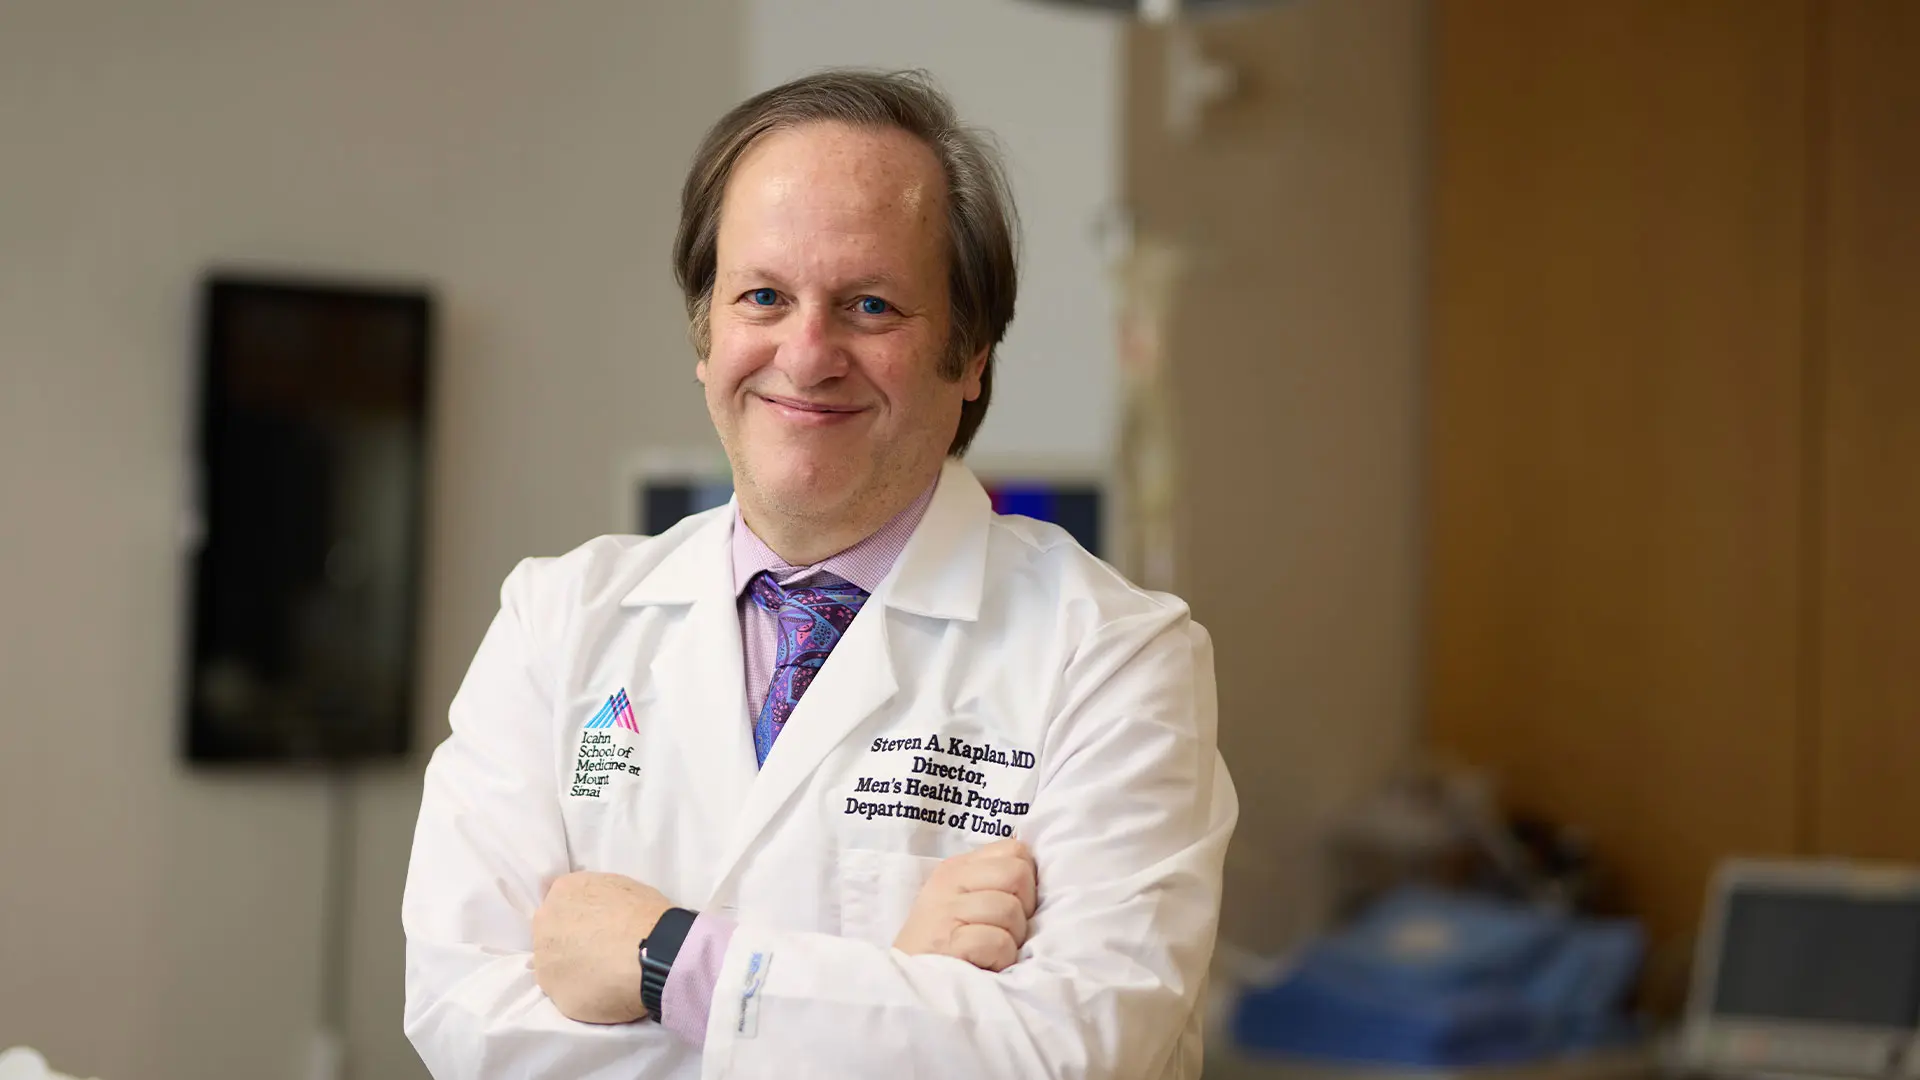 Steven Kaplan, MD, FACS, Professor of Urology at the Icahn School of Medicine at Mount Sinai and Director of the Men’s Wellness Program 